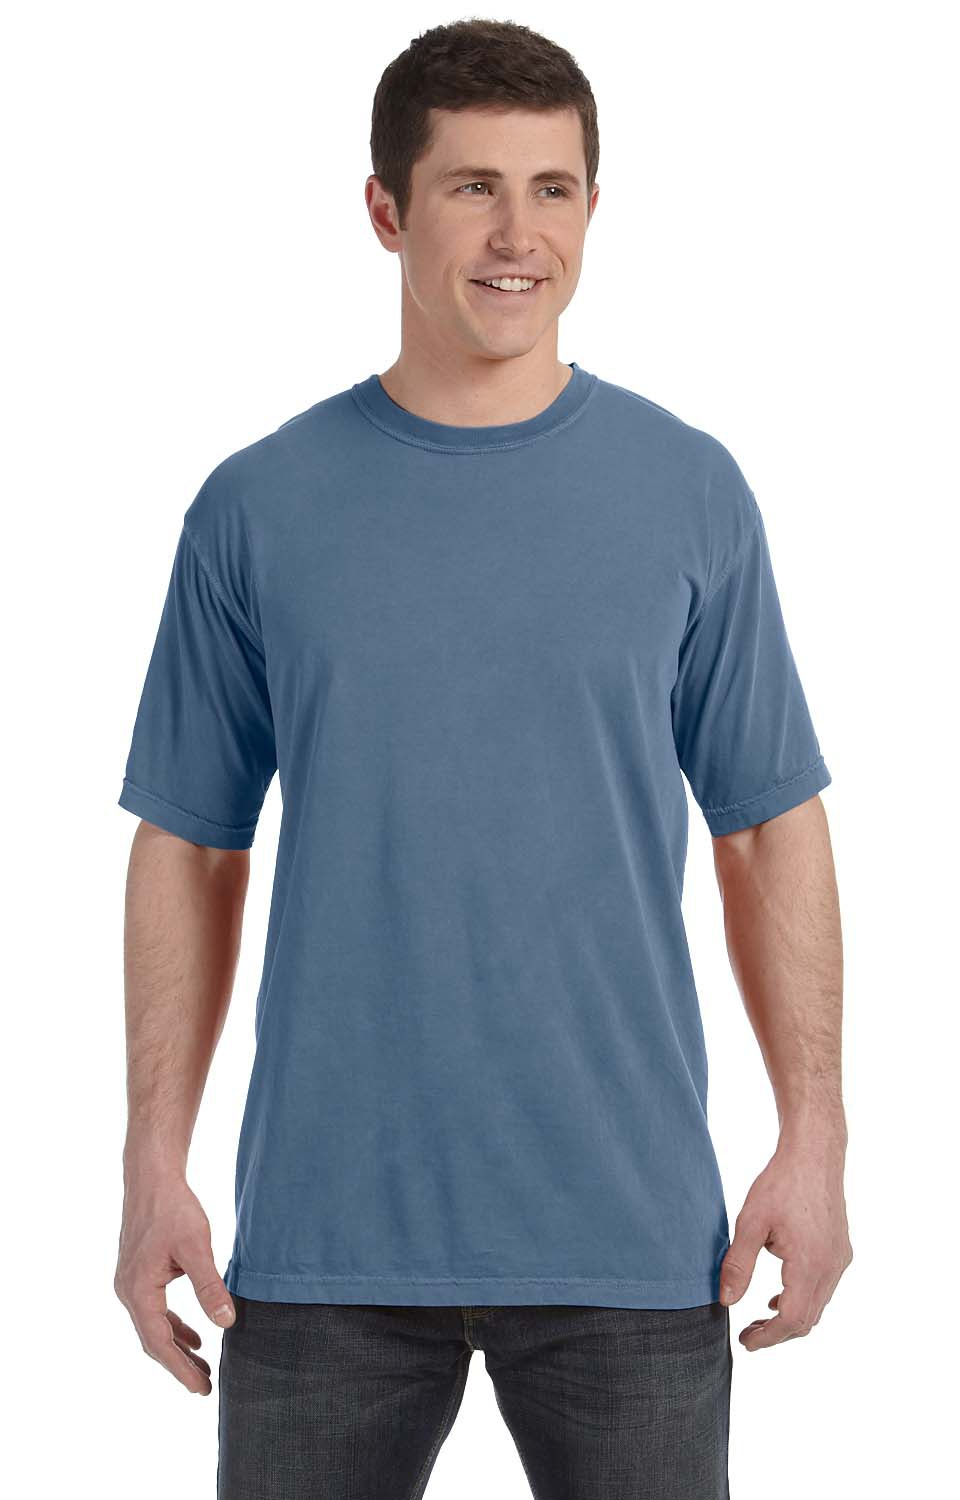 denim blue color shirt